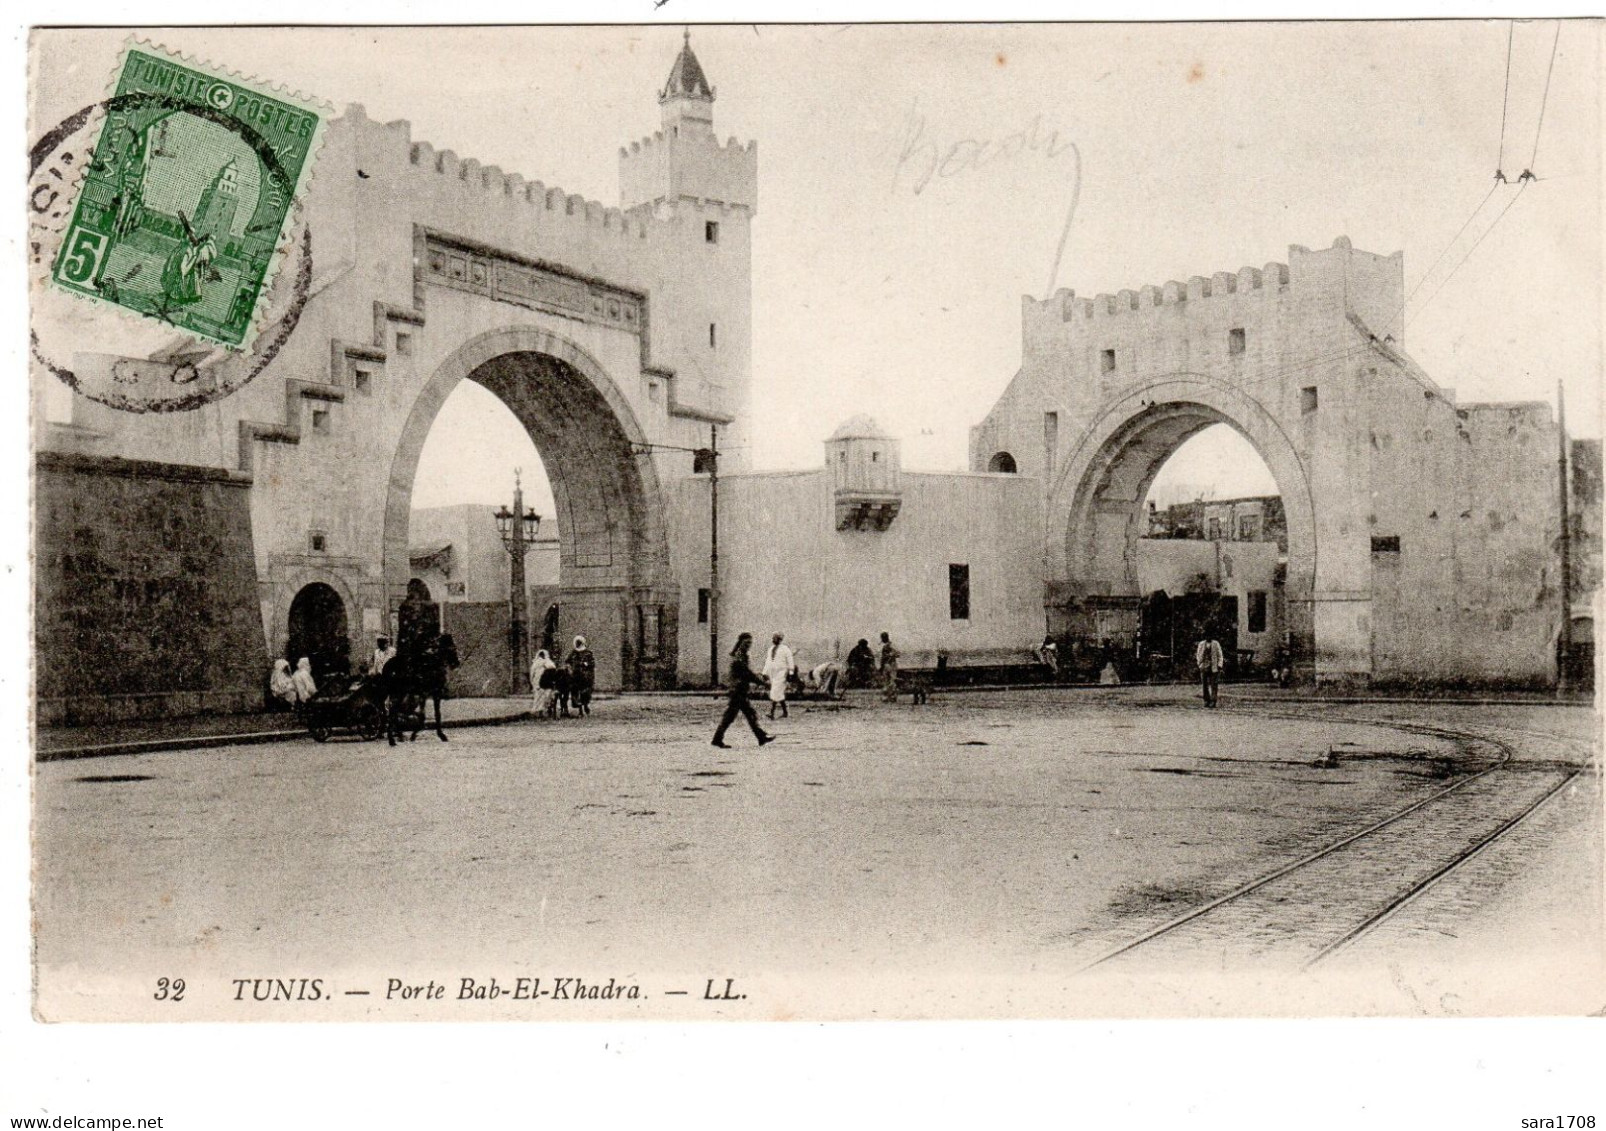 TUNIS, Porte Bab El Khadra, 2 SCAN. - Tunisia